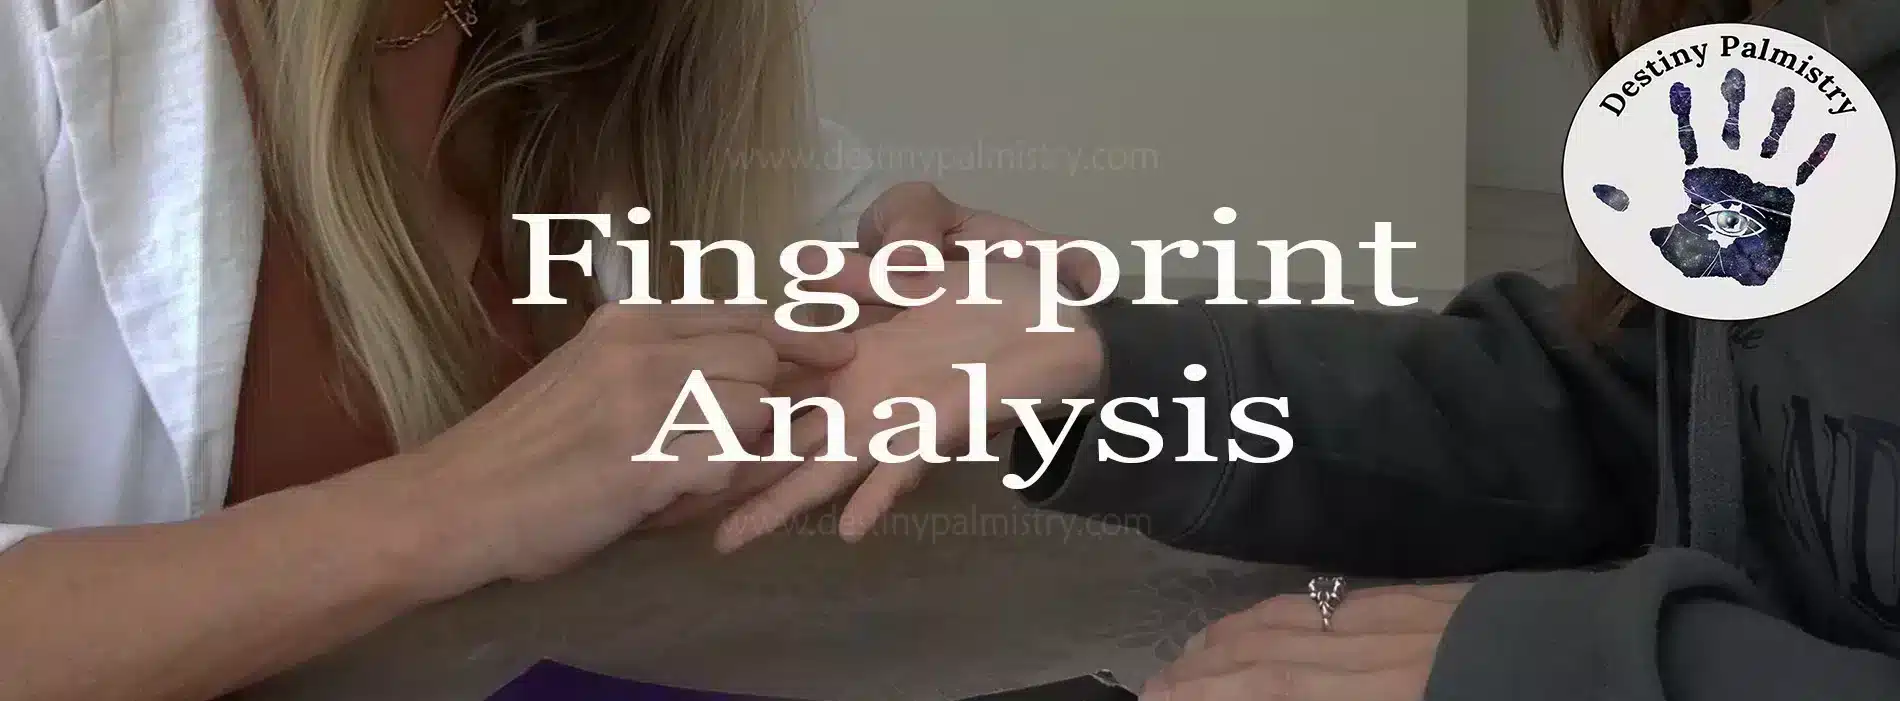 fingerprints in the practice of palmistry